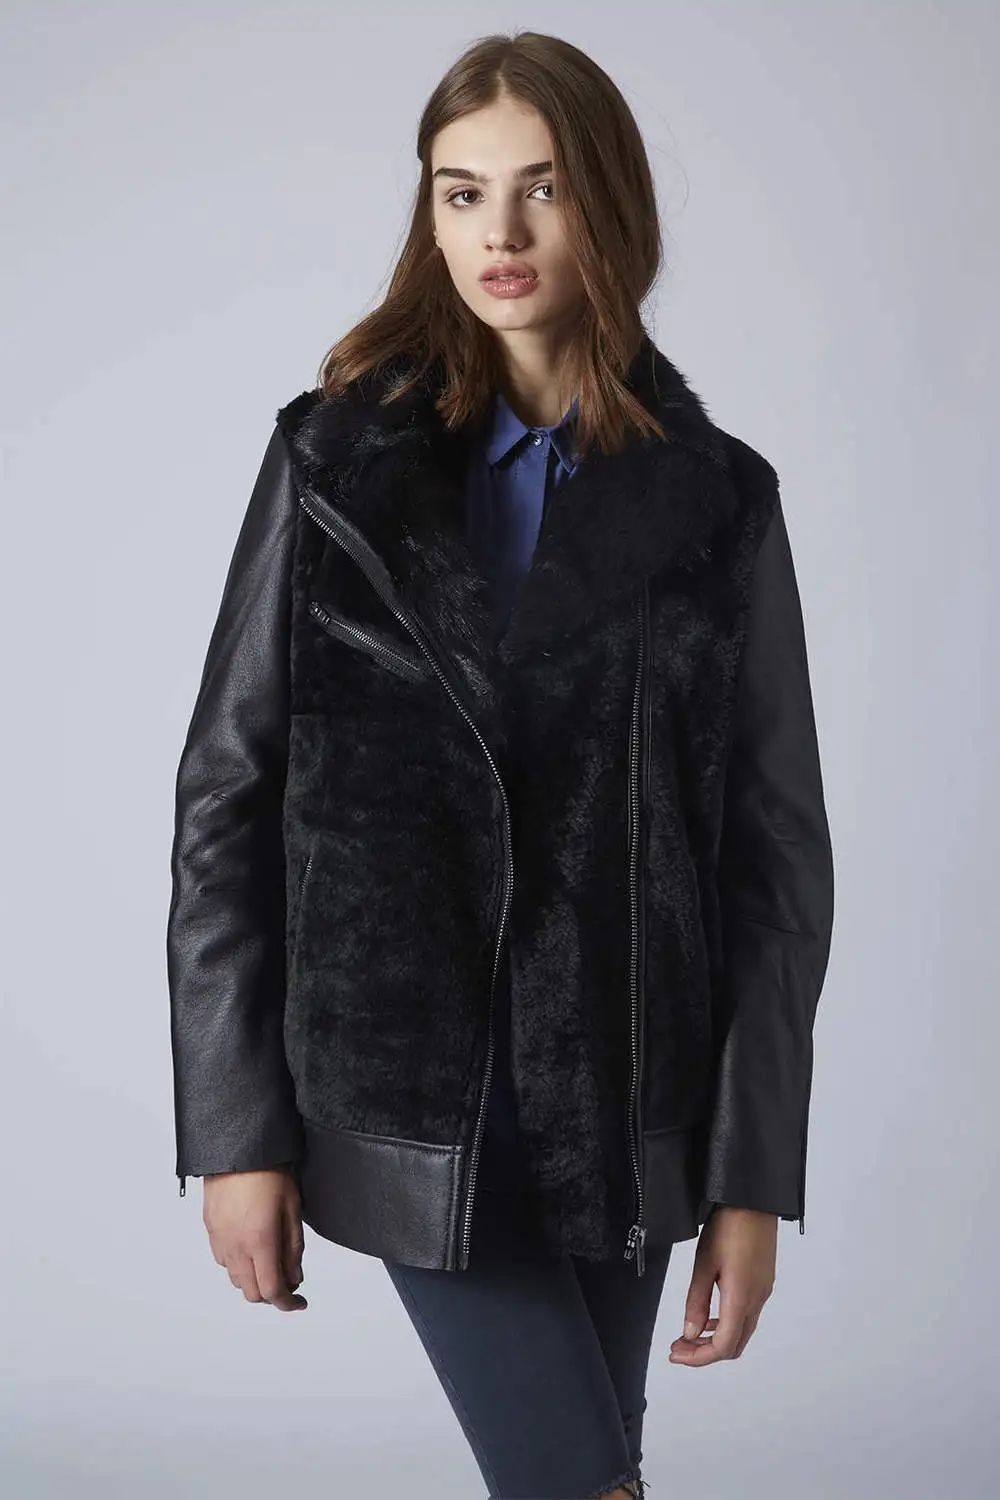 Leather Coat Shops Promotion-Shop for Promotional Leather Coat ...